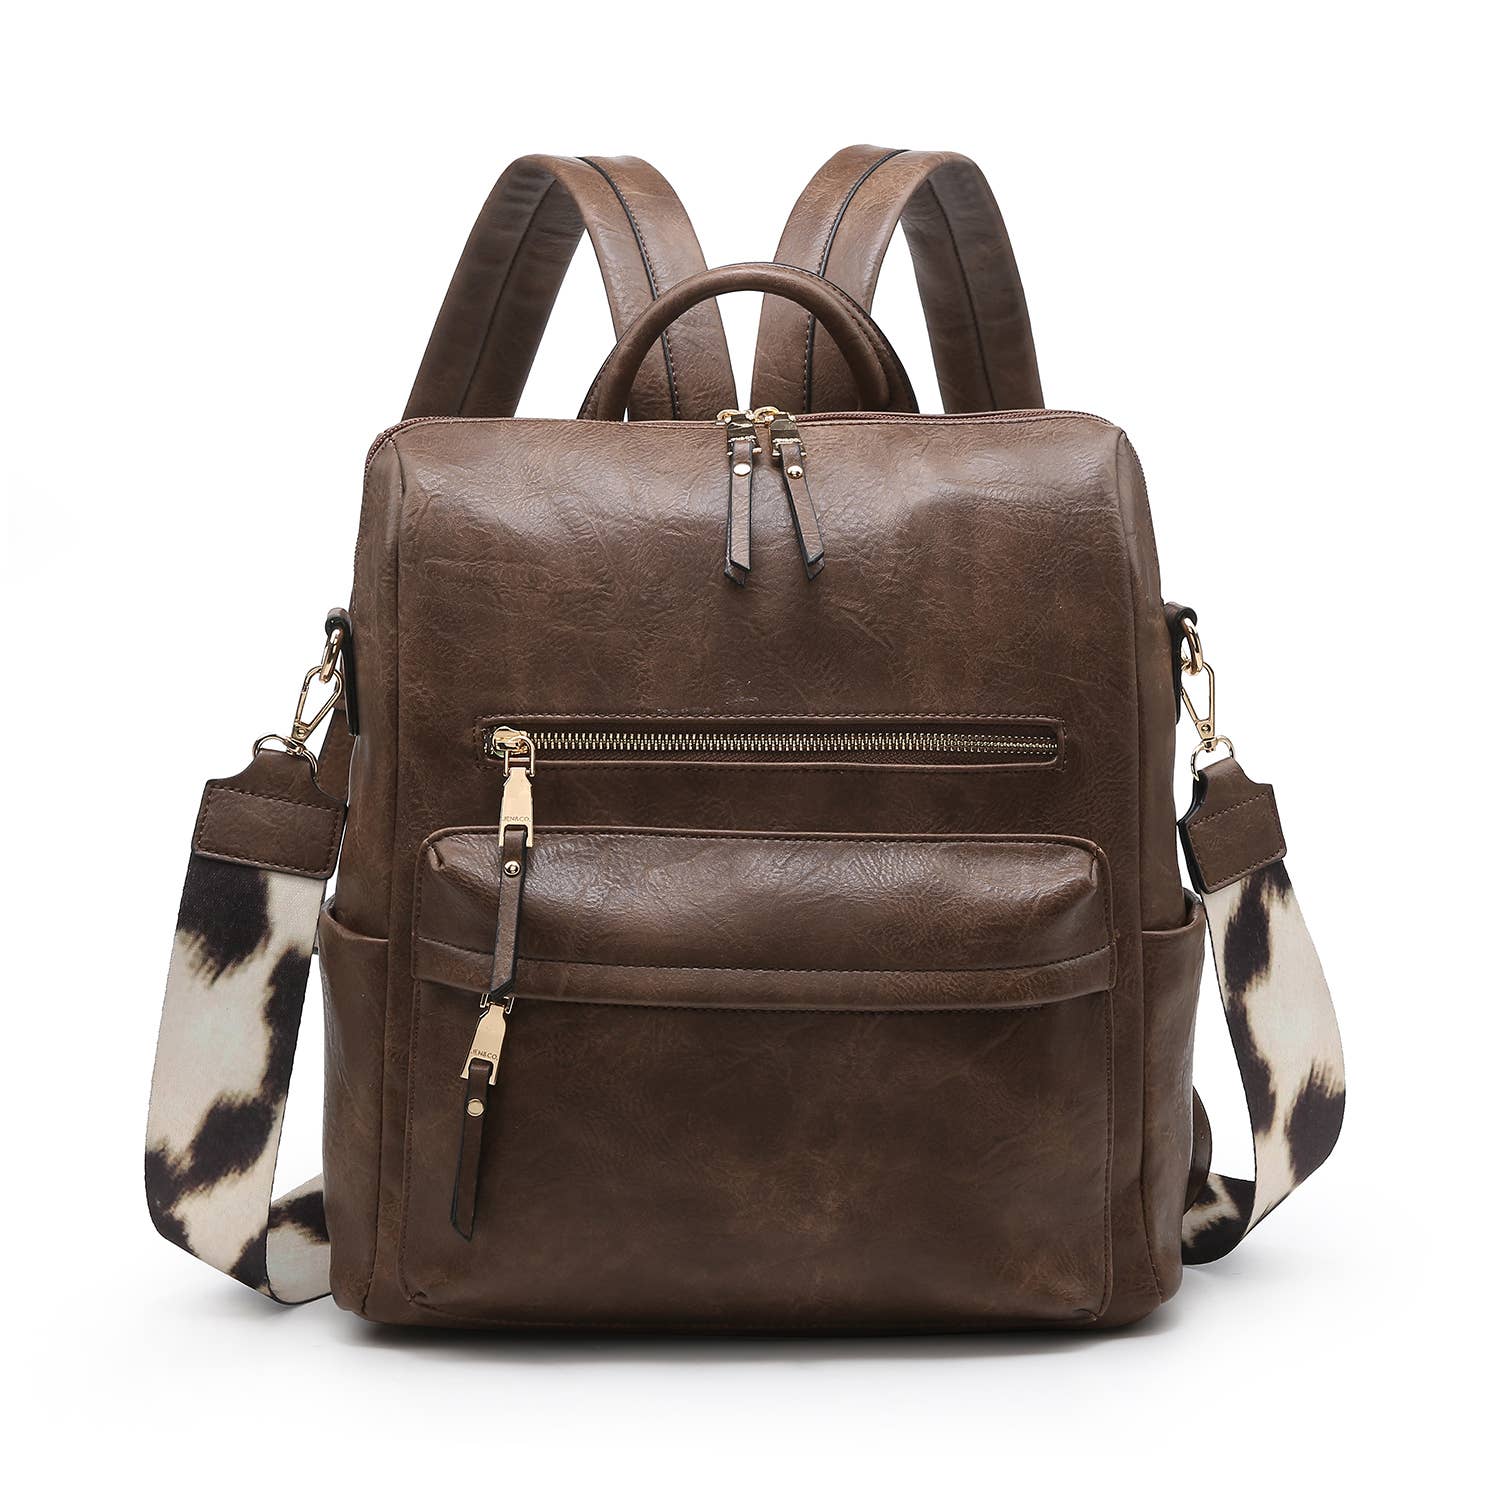 Chocolate Brown Amelia Convertible Backpack Handbag